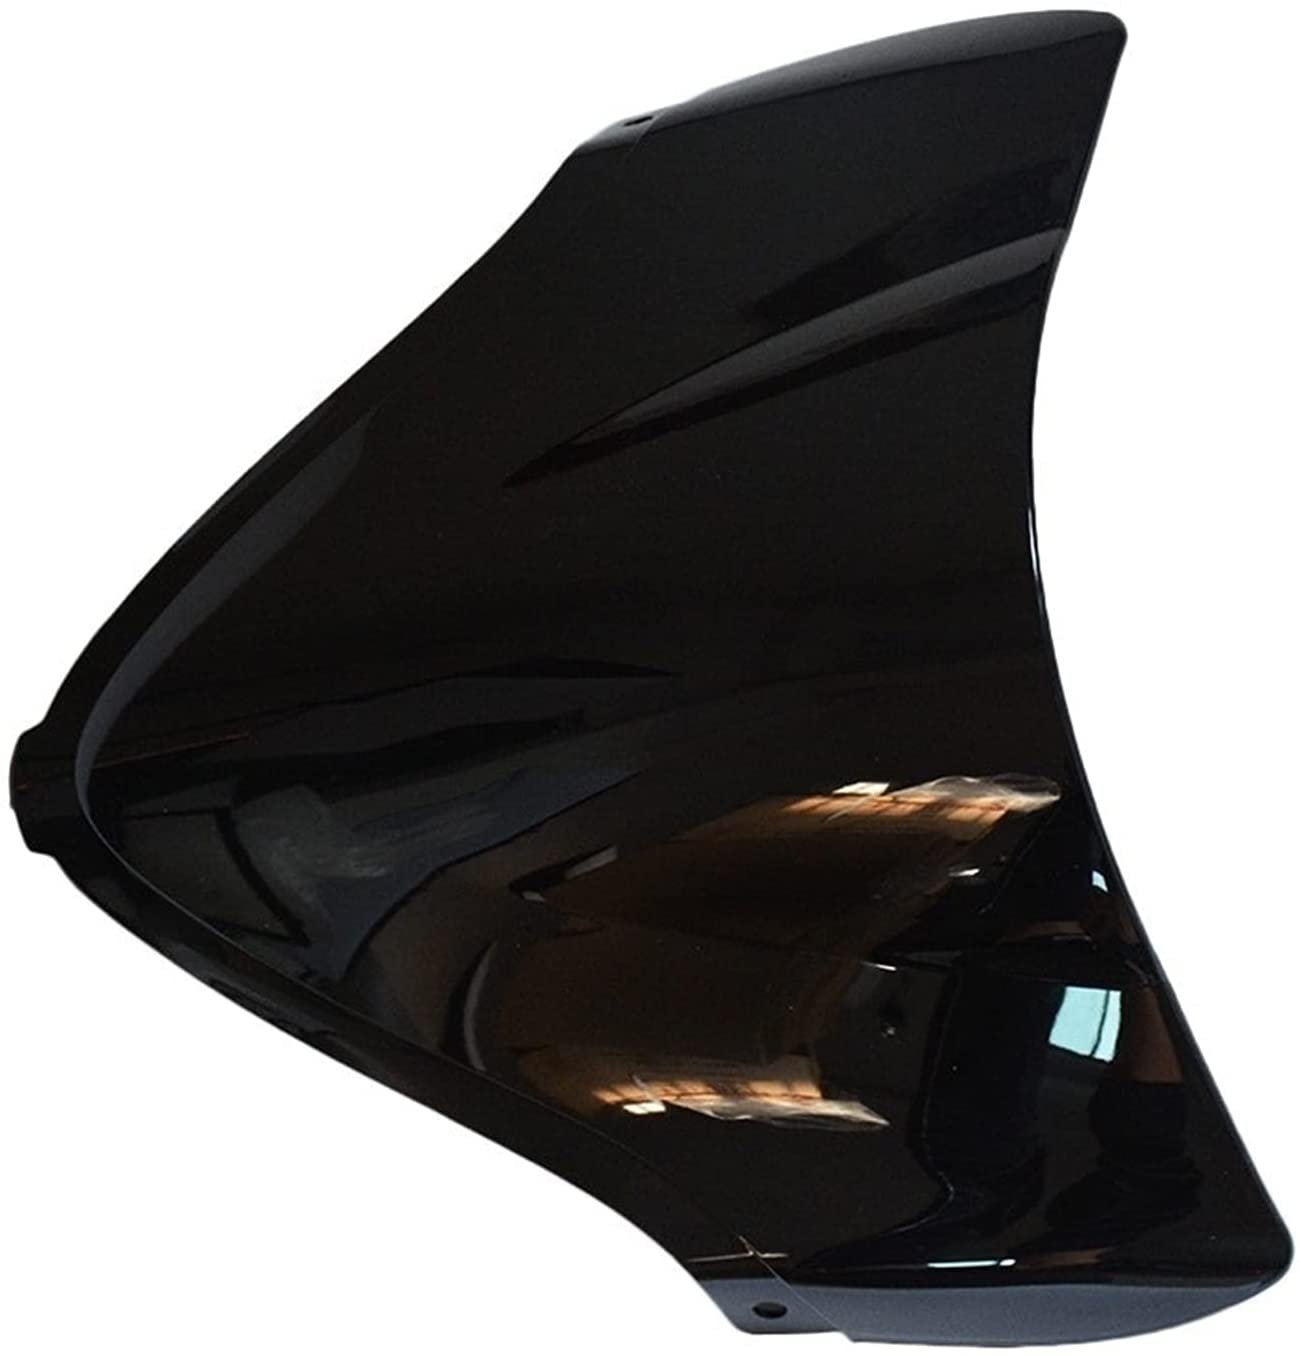 Aerofairing screen Windshield Windscreen for Suzuki GSXR1300 Hayabusa 2008 09 10 11 12 13 14 15 16 17 8